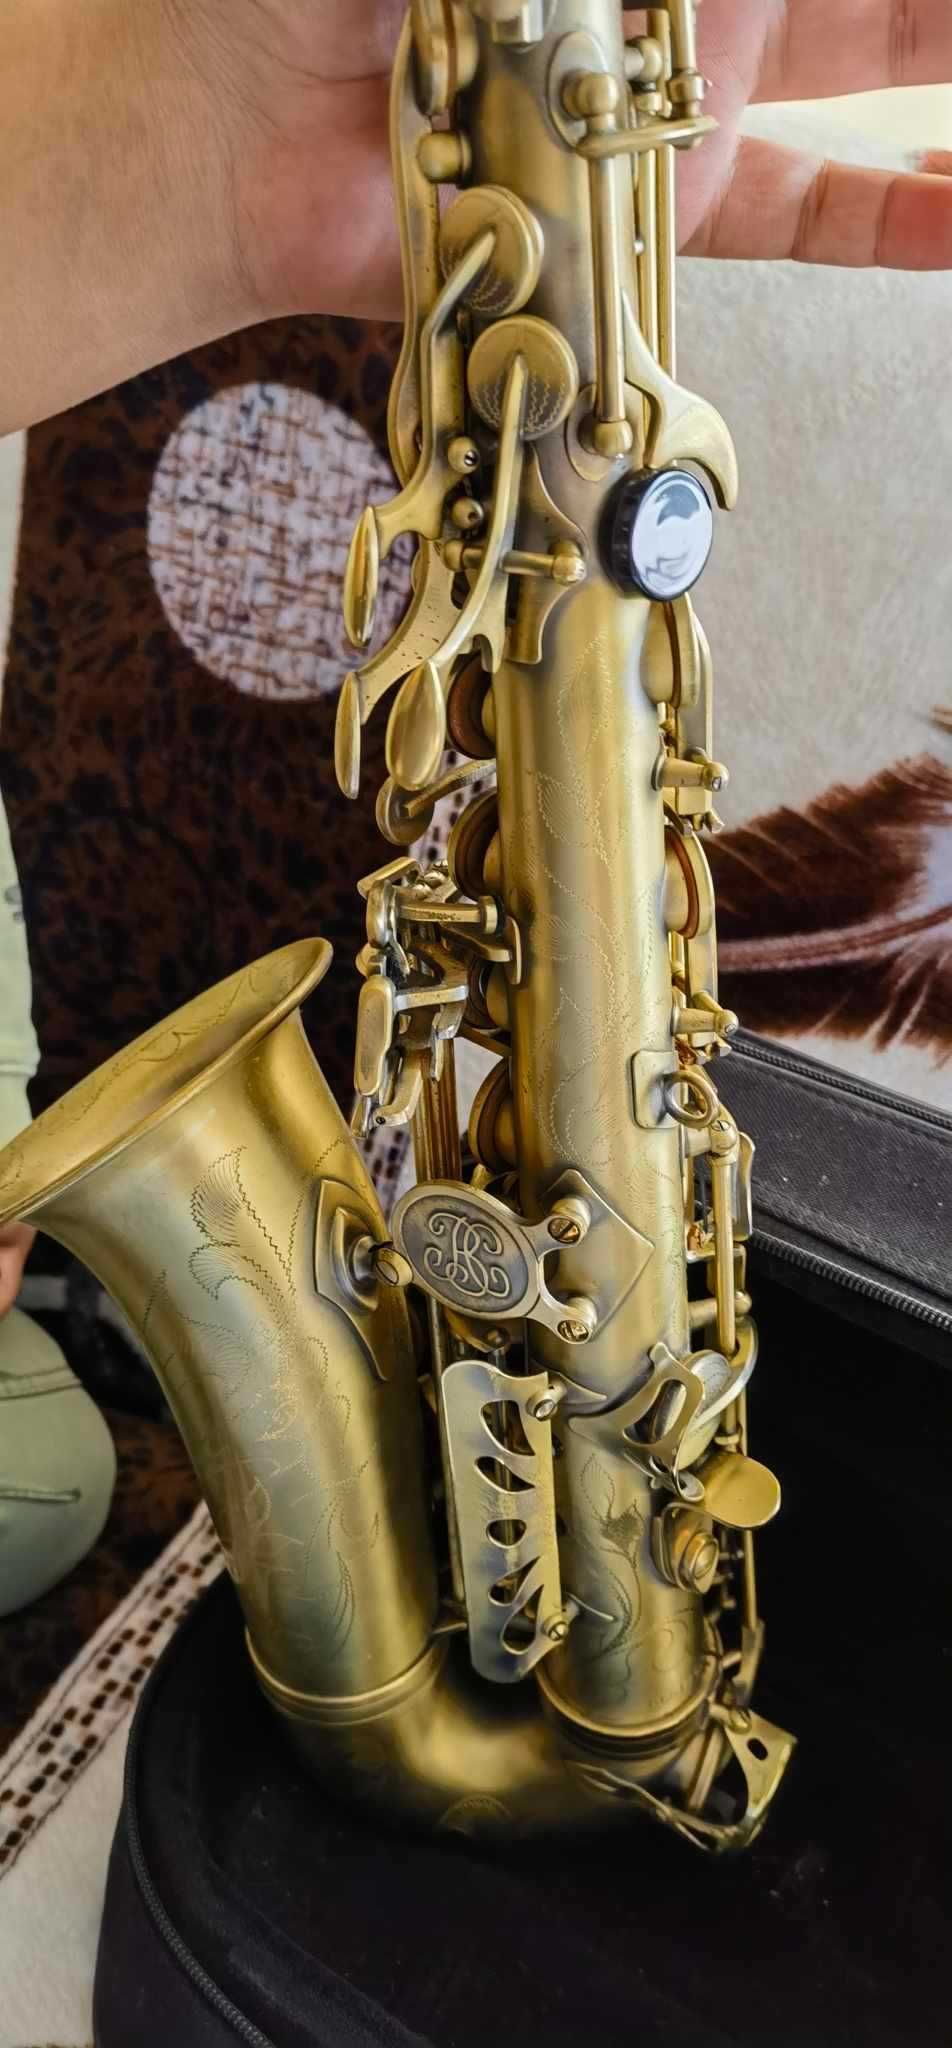 SE vinde 2 saxofoane si 2 flaute !!